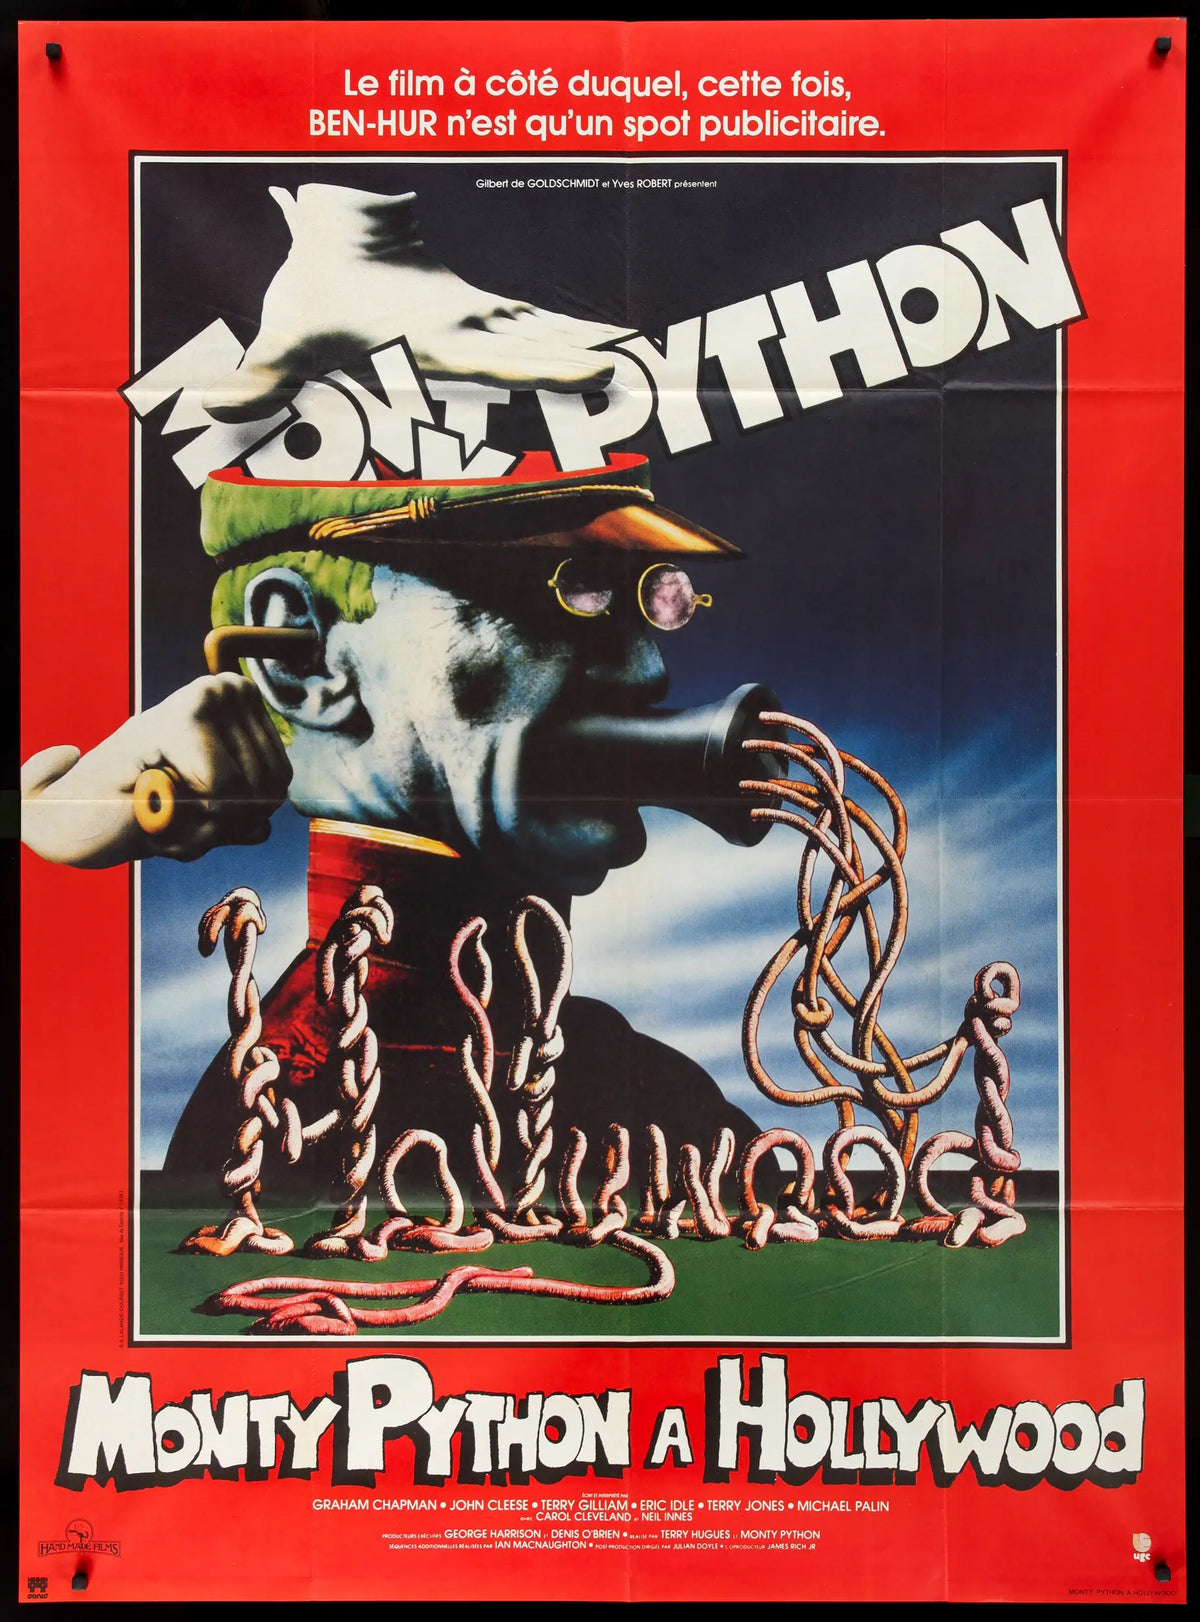 Monty Python Live at the Hollywood Bowl (1982) original movie poster for sale at Original Film Art